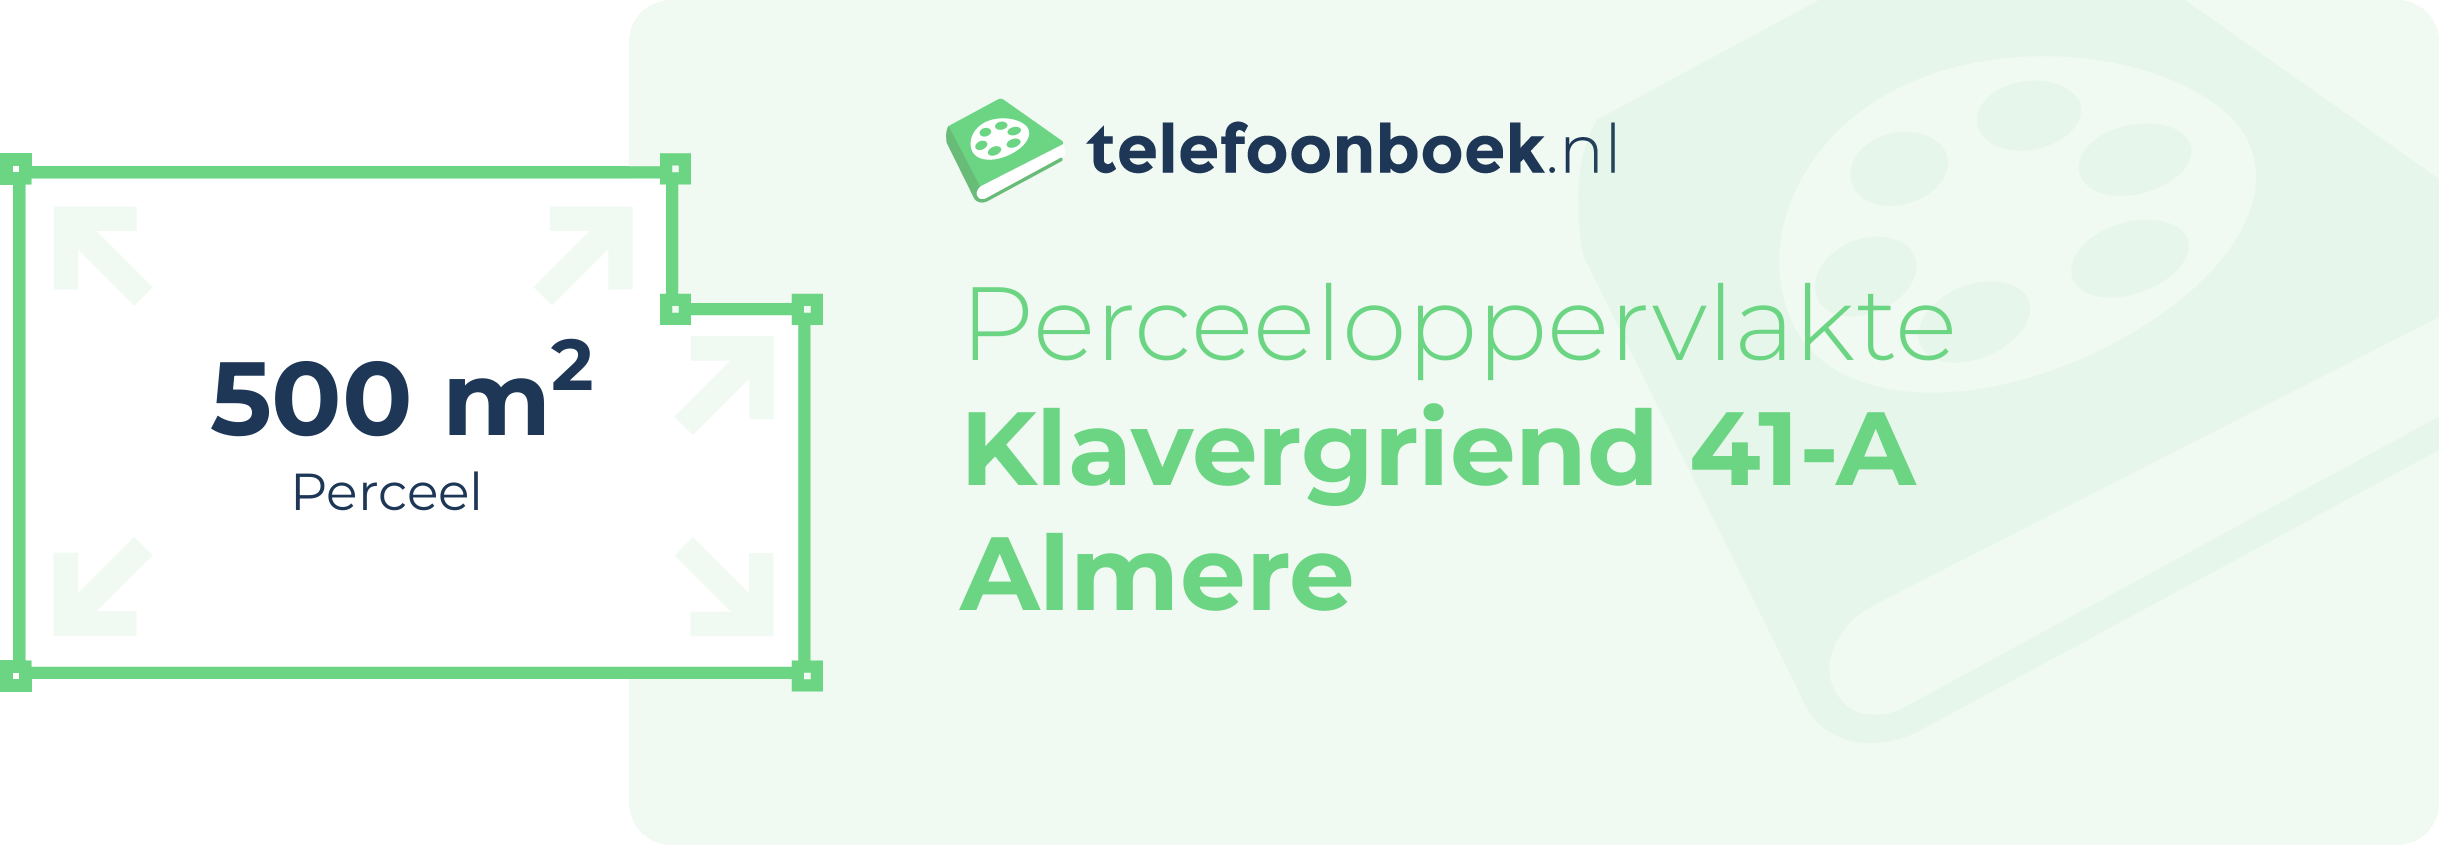 Perceeloppervlakte Klavergriend 41-A Almere